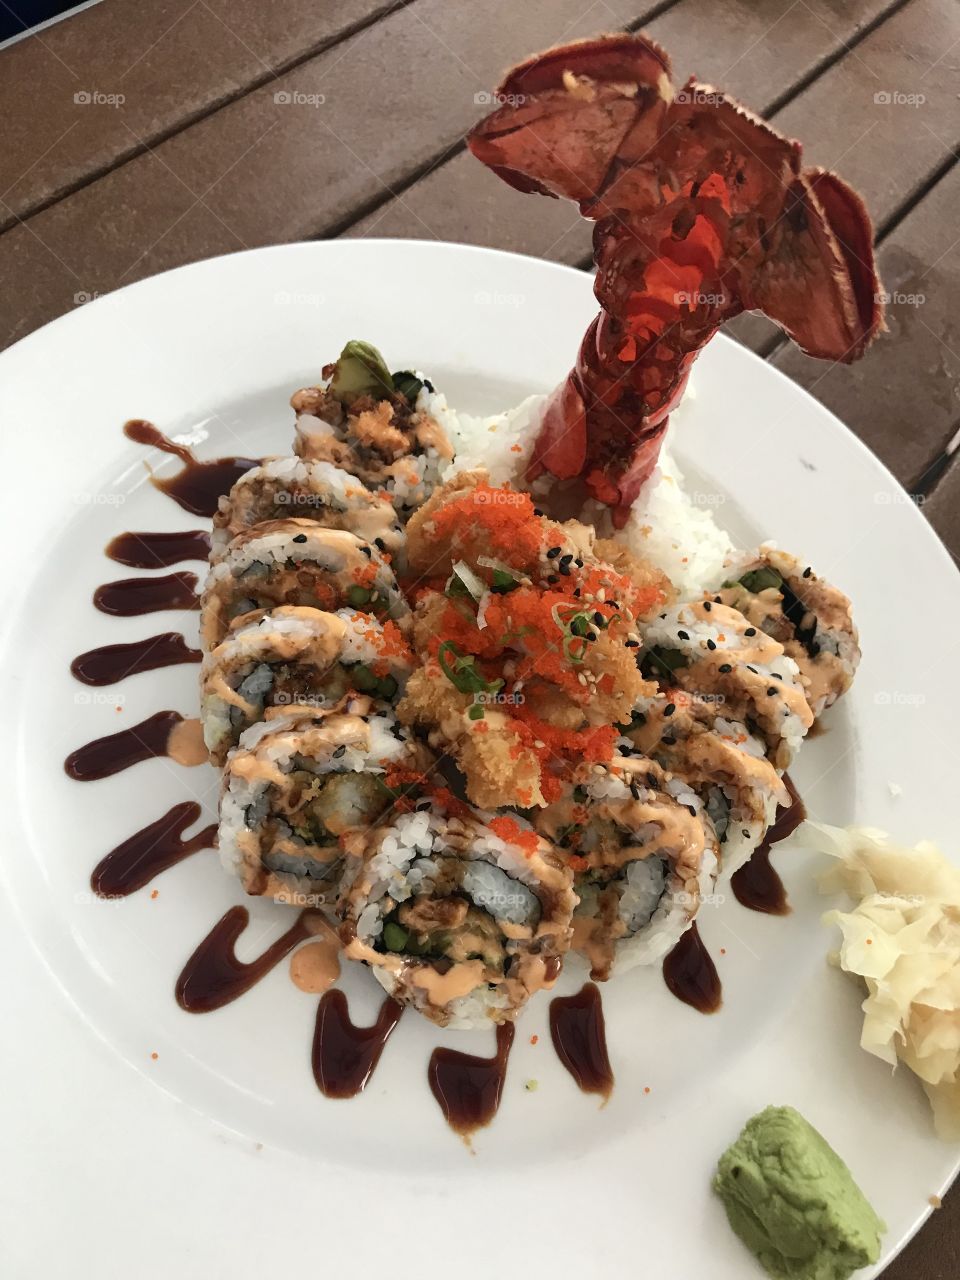 Mermaid sushi